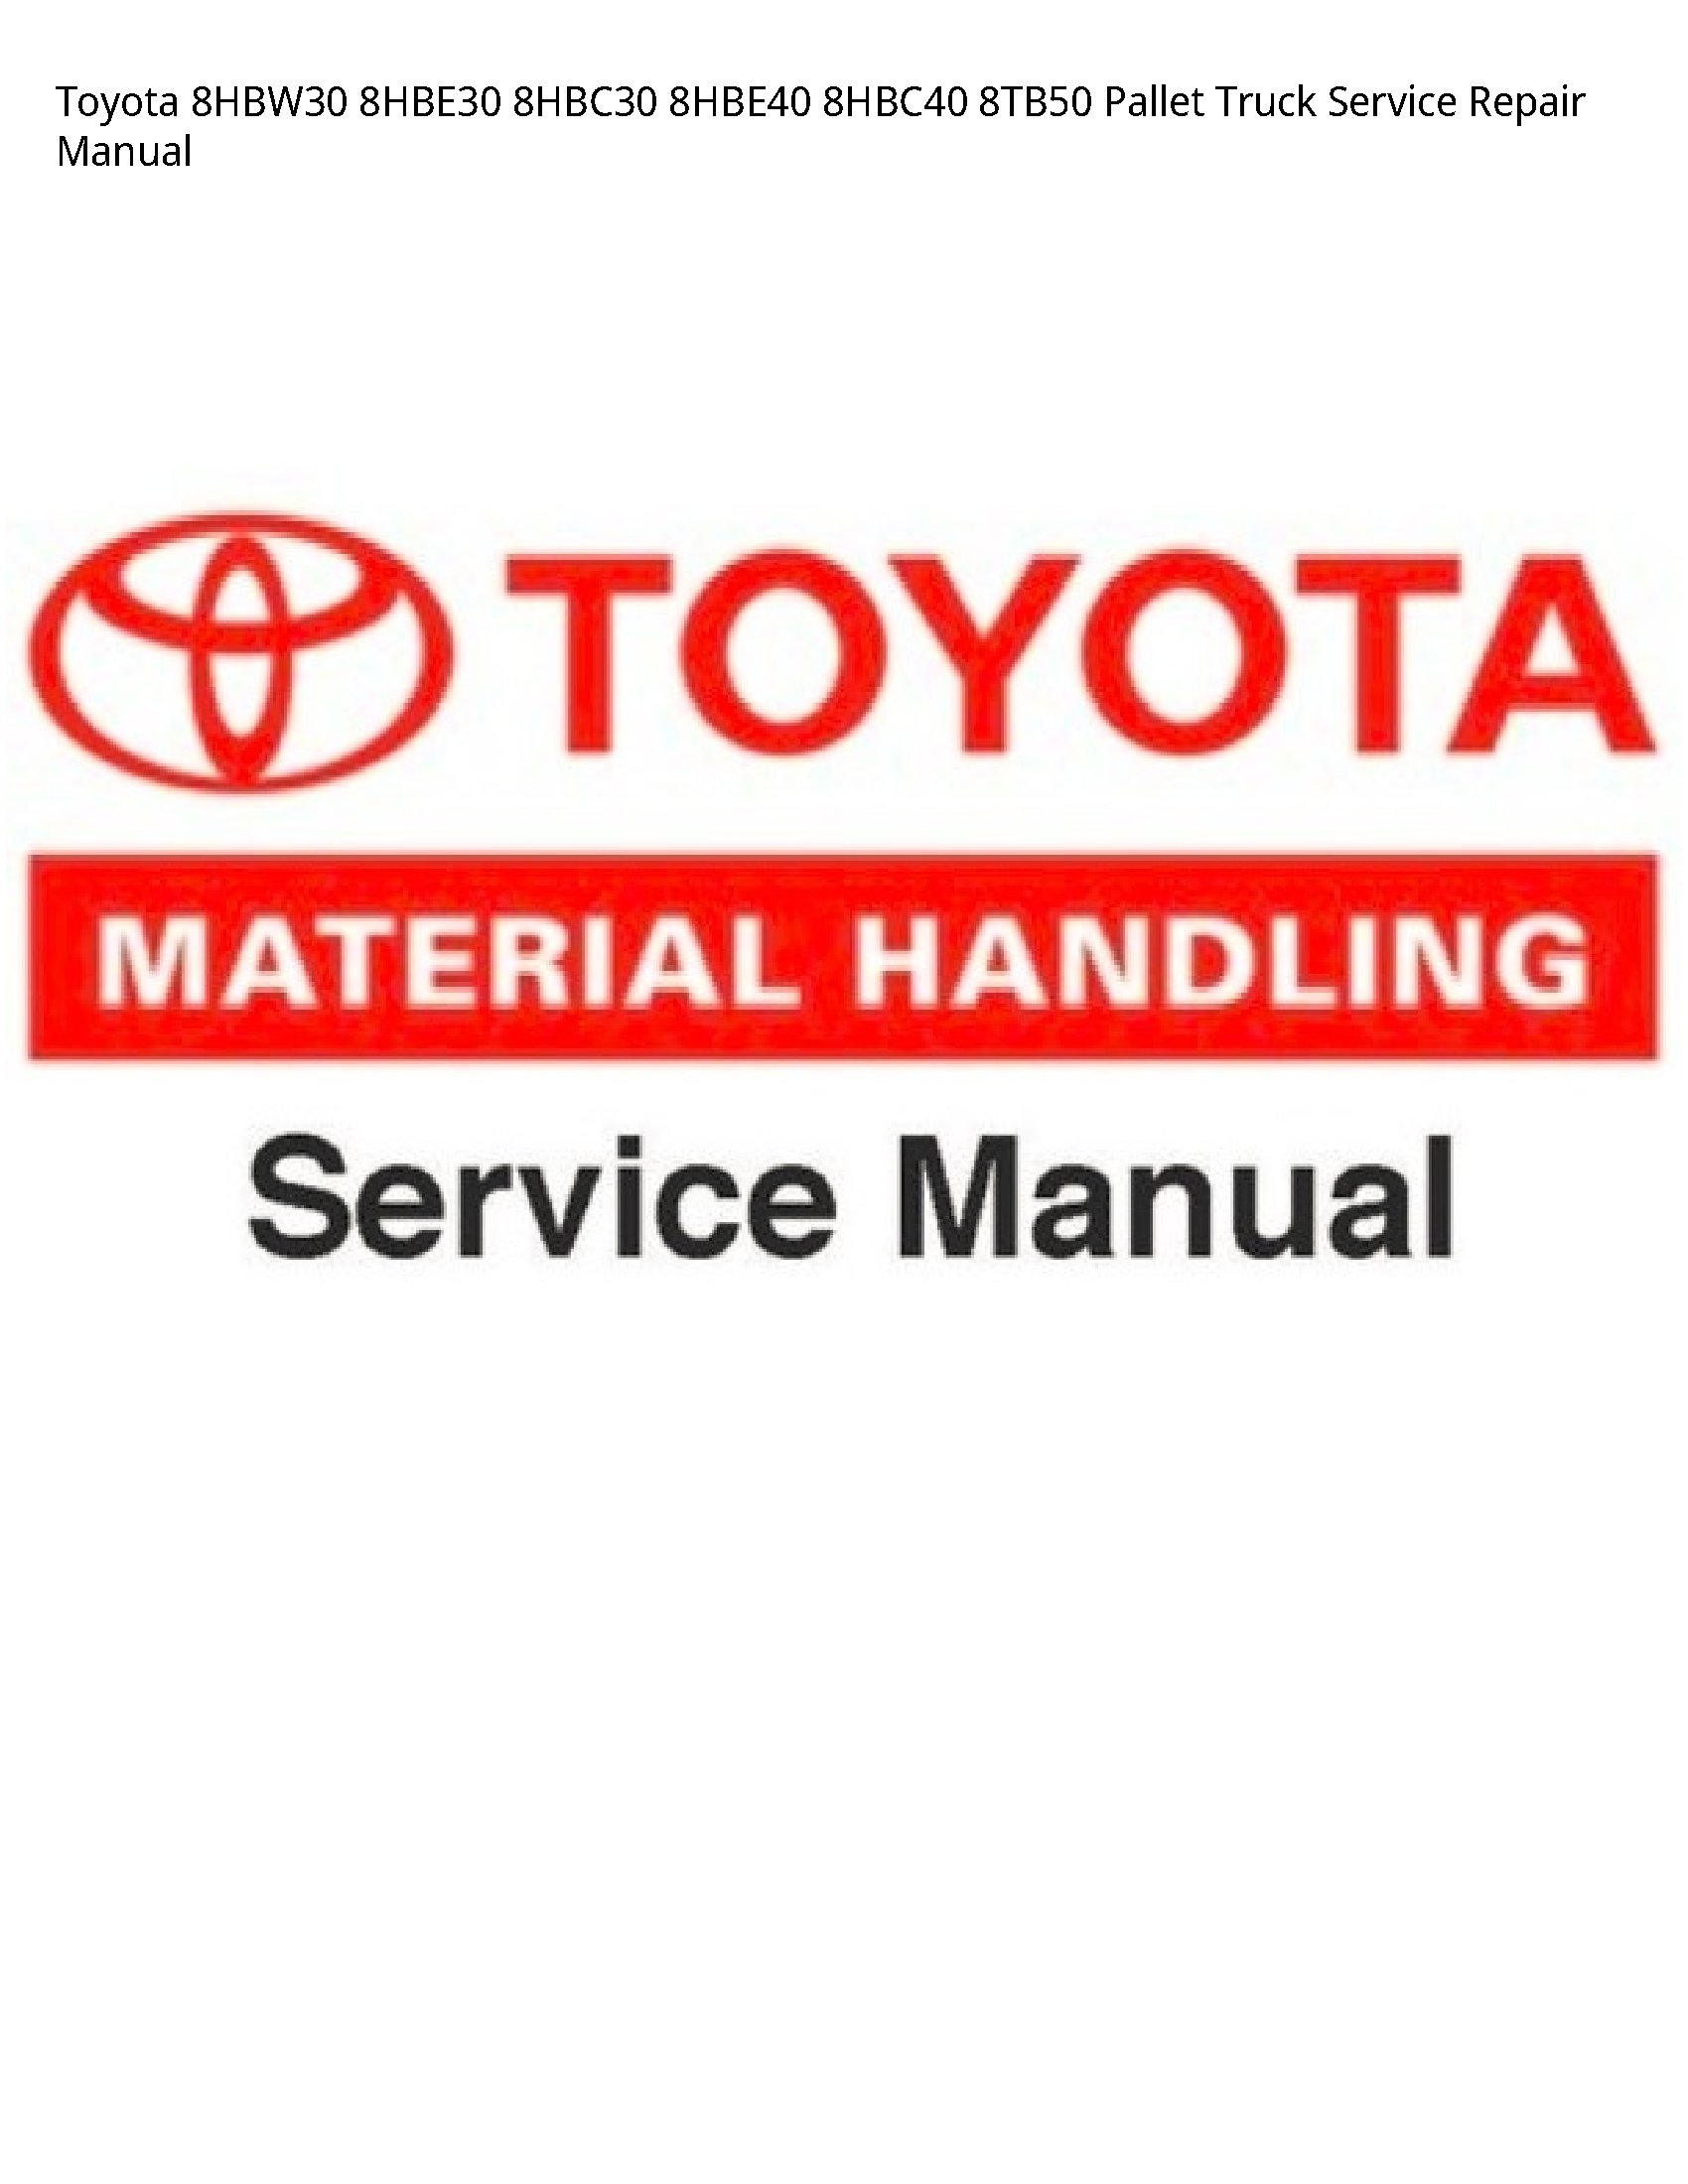 Toyota 8HBW30 Pallet Truck manual